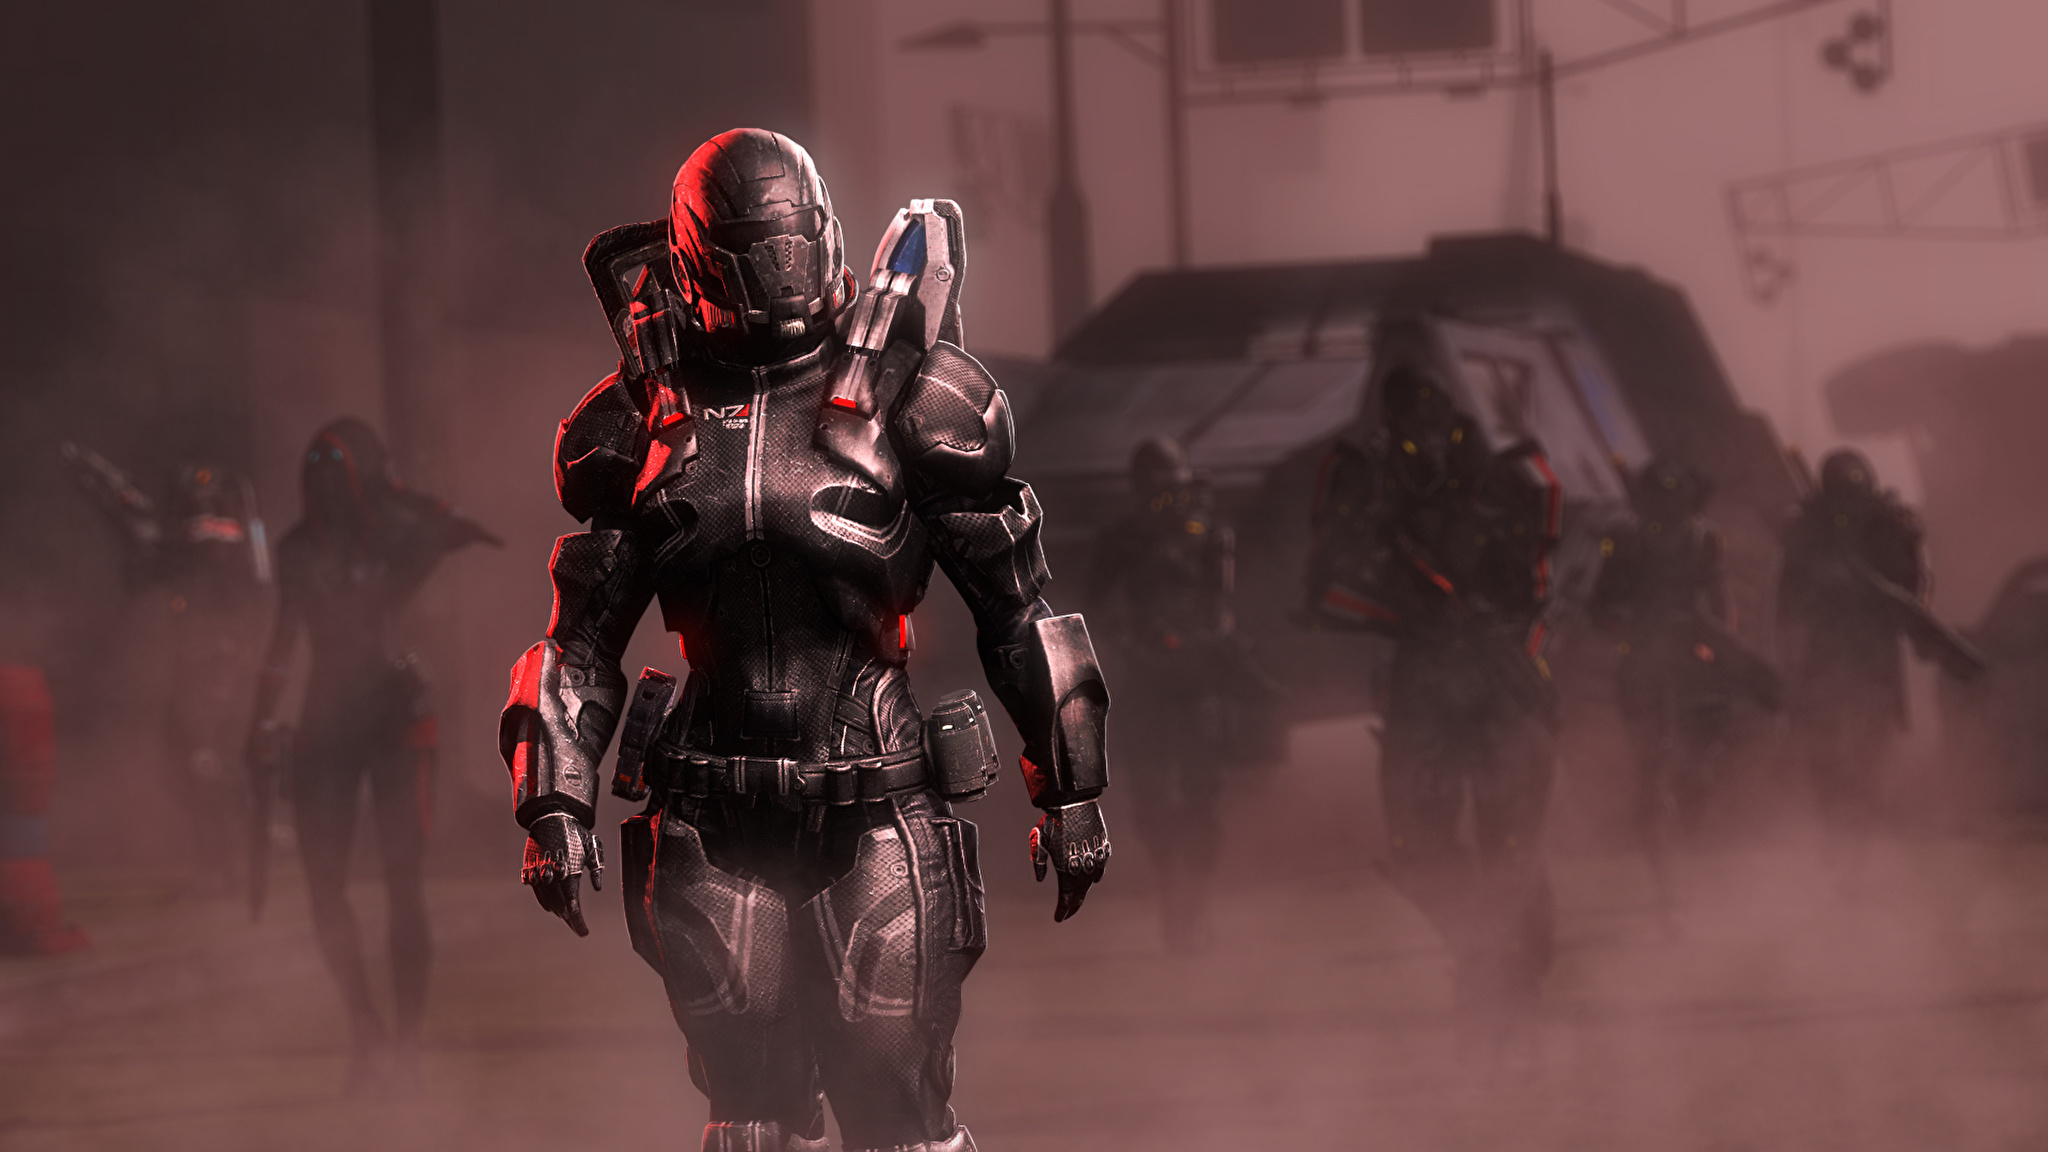 Персонажи игр будущего. N7 Шепард. Броня n7 Andromeda арт. Mass Effect 3 броня n7. Шепард масс эффект n7.